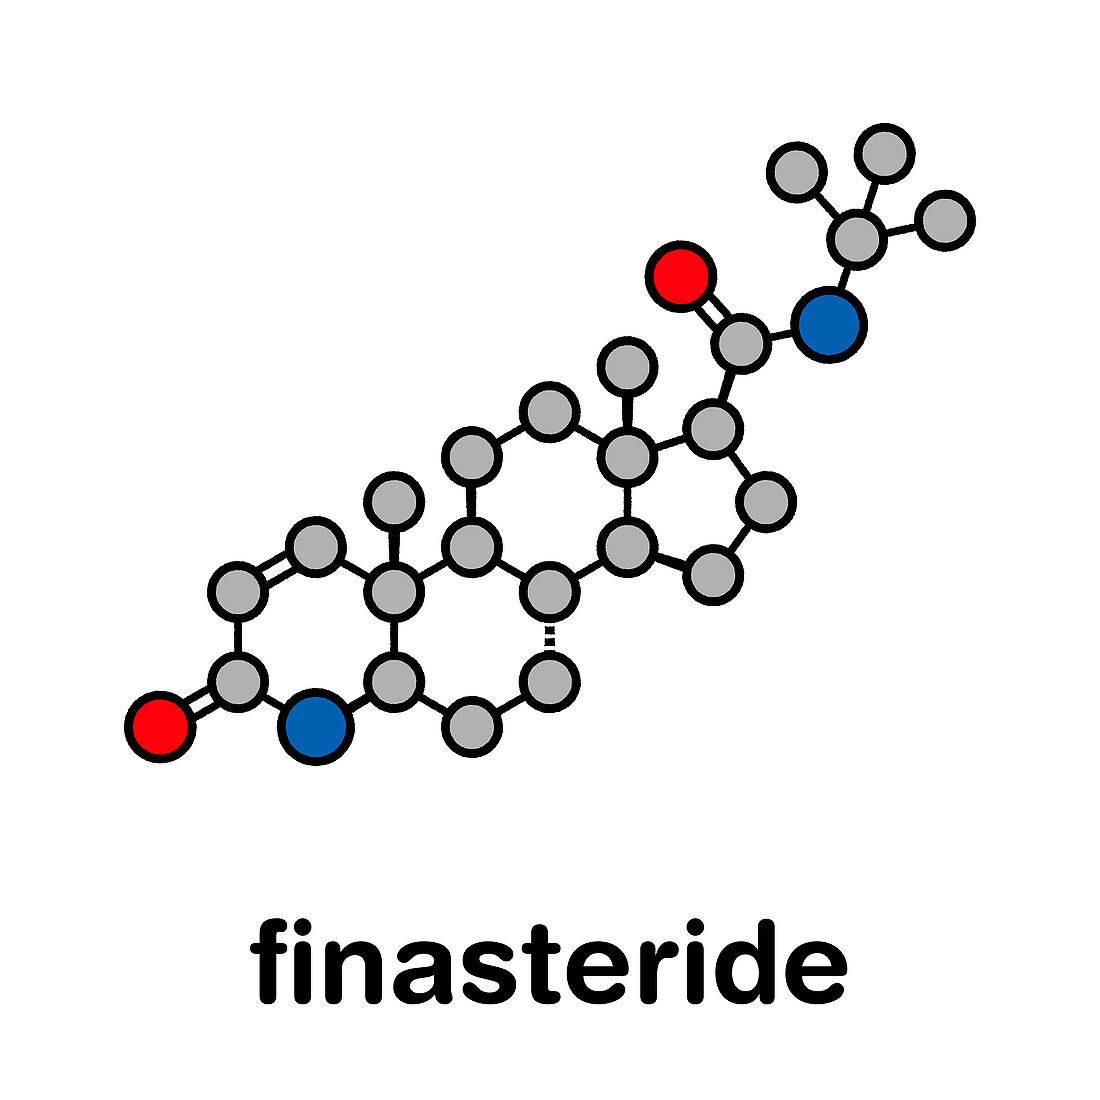 Finasteride male pattern baldness drug, molecular model